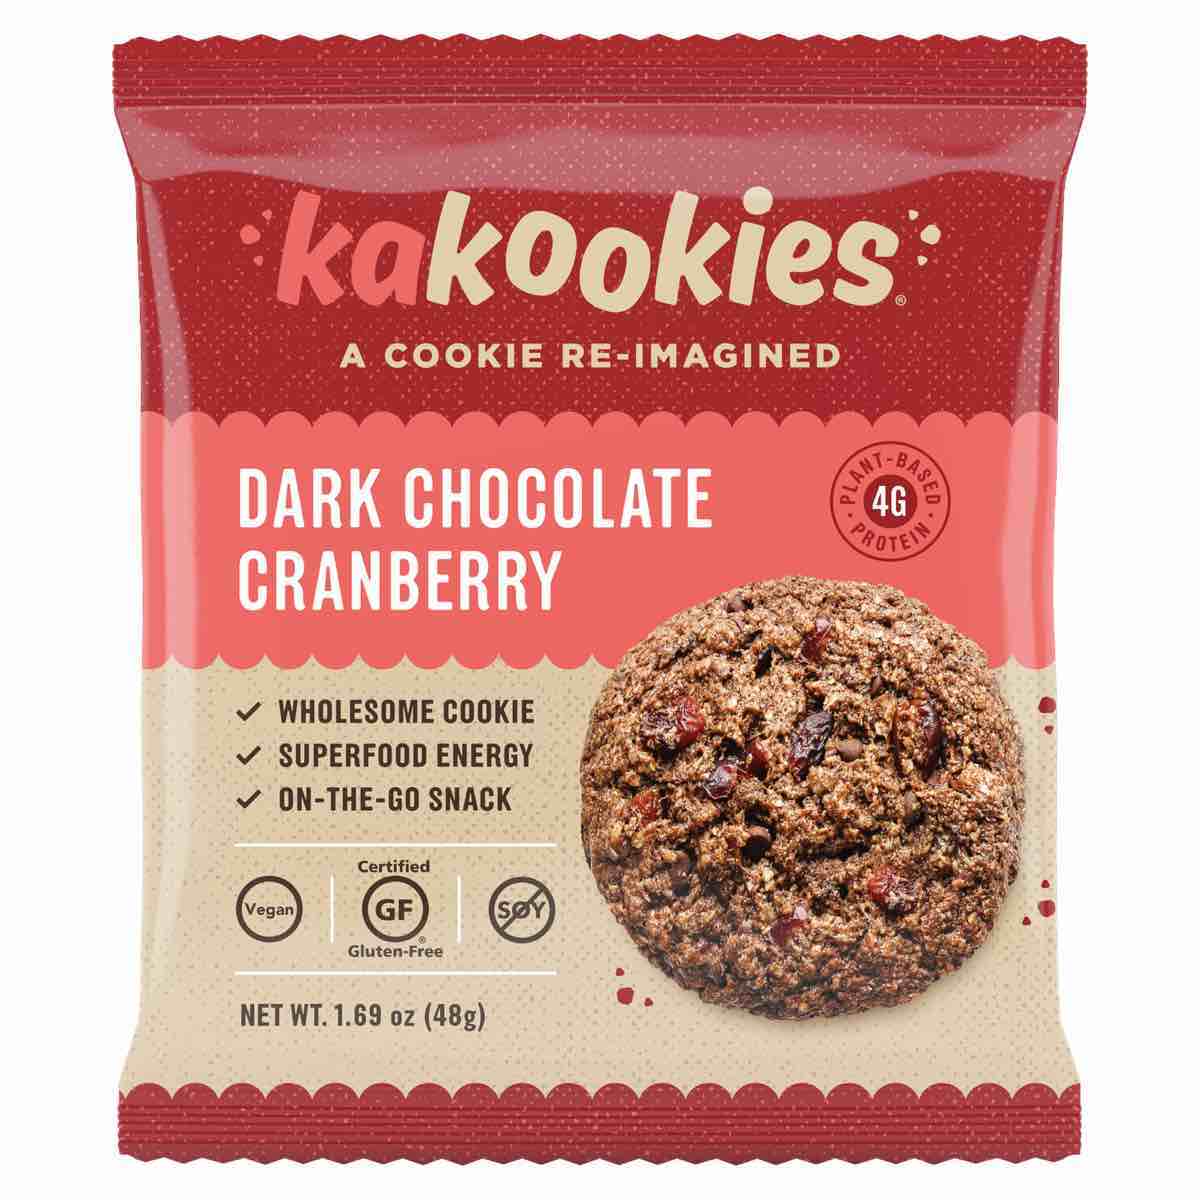 Dark Chocolate Cranberry Kakookies